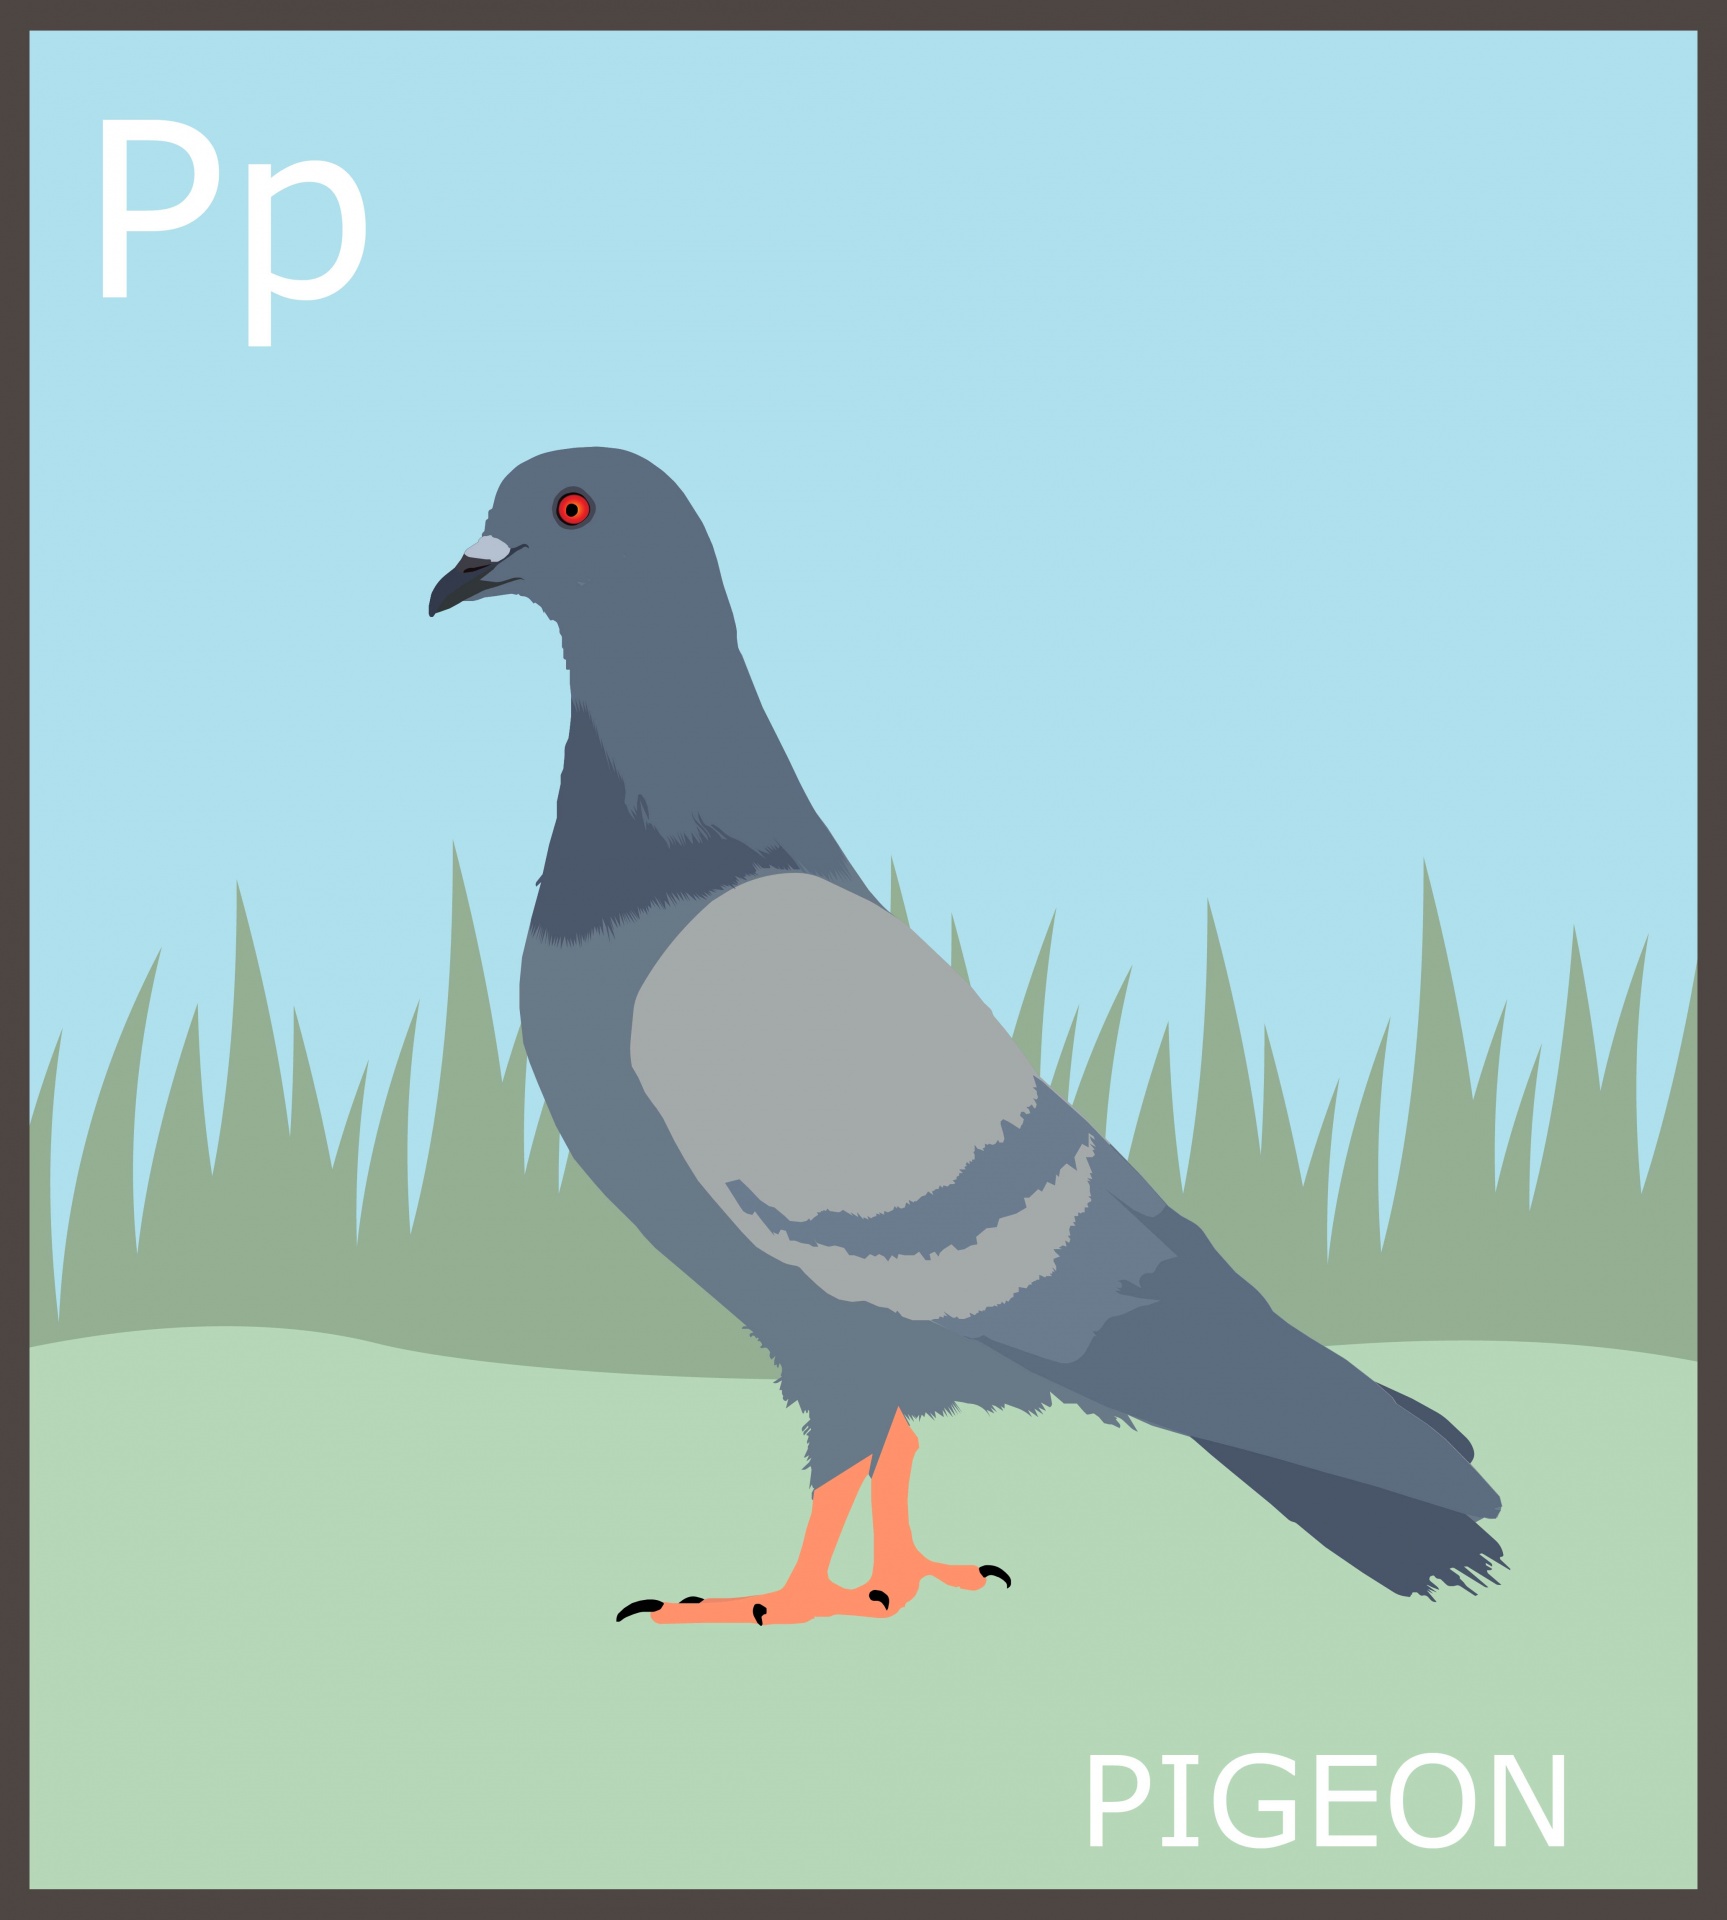 Letter P for pigeon, animal alphabet for kids, flash card, educational, learning, abc, art illustration